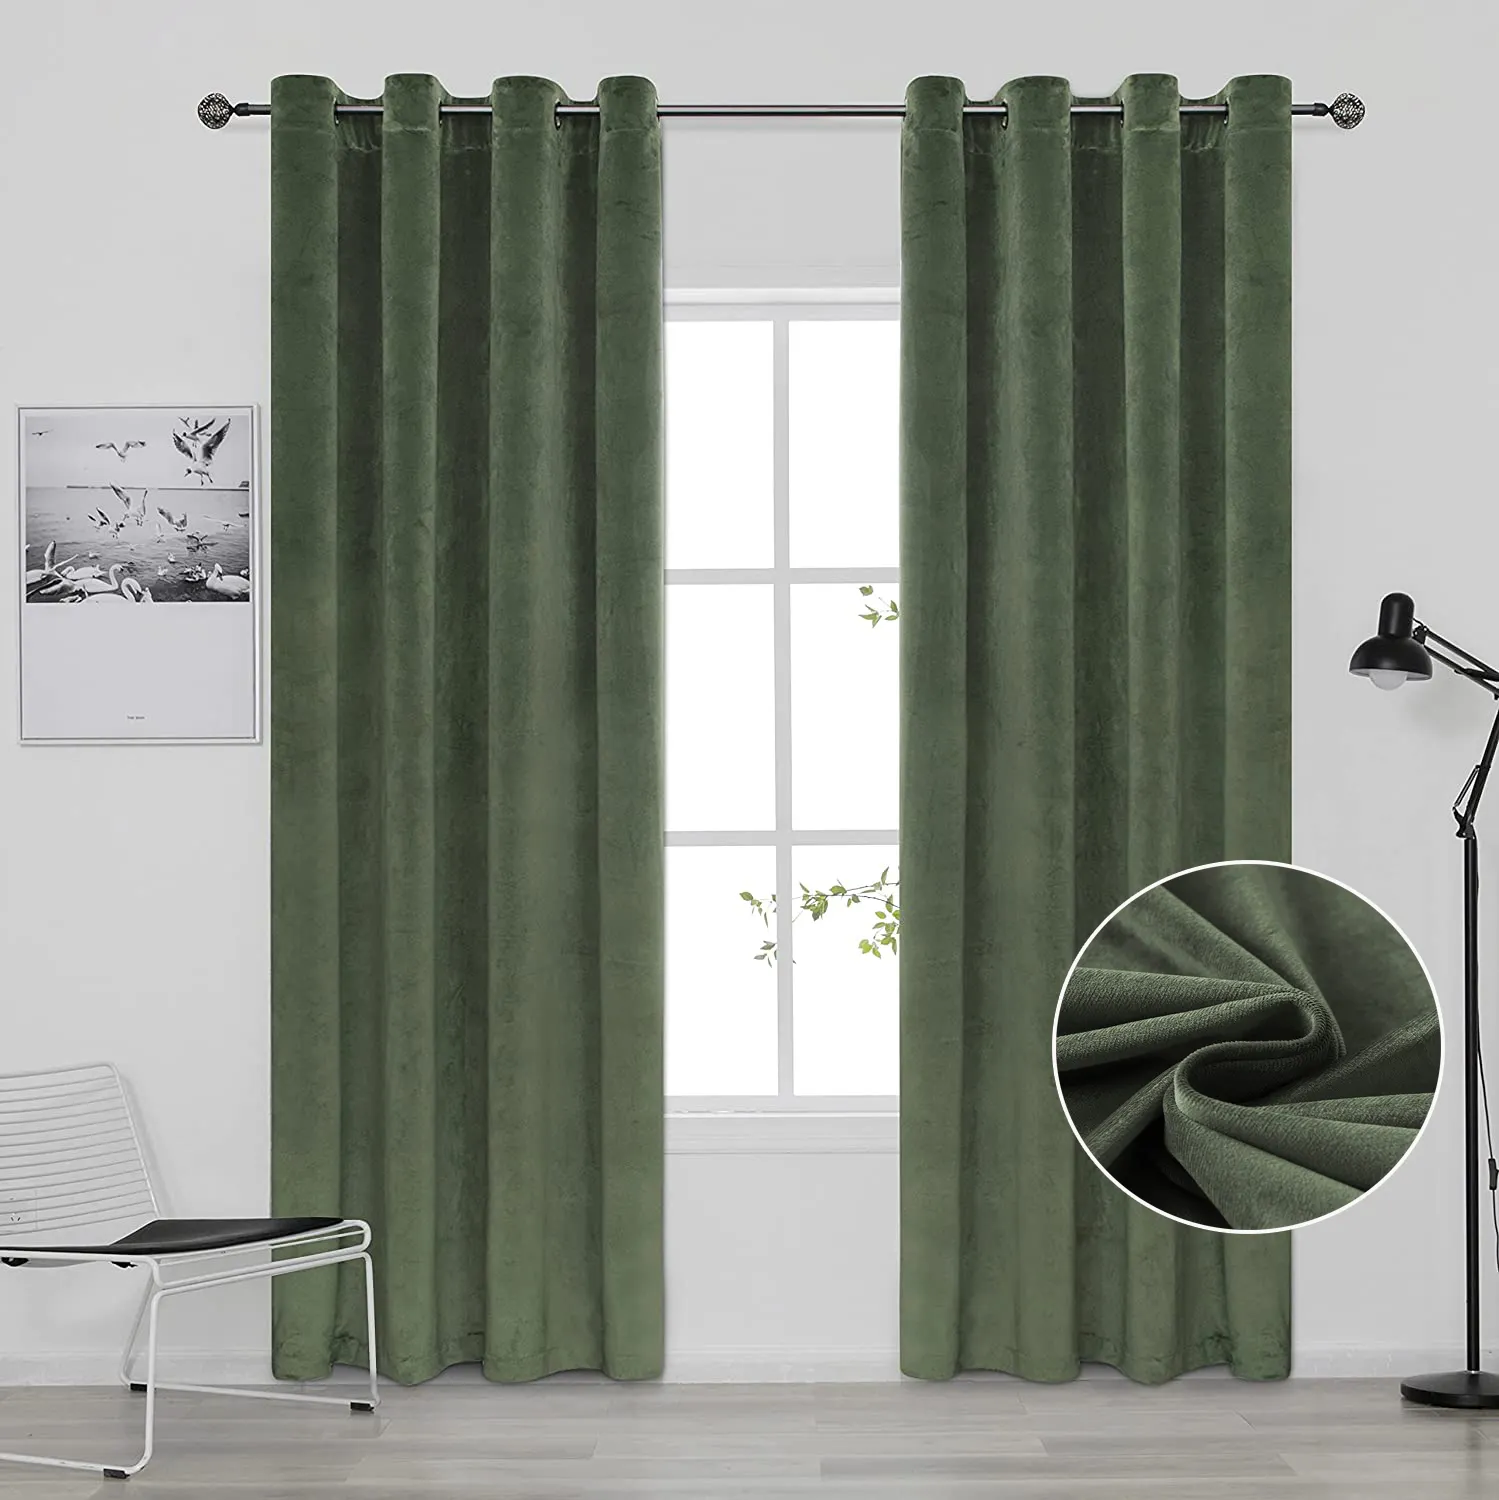 Cortinas de veludo esmeralda veludo, atacado, esmeralda, blackout, cortinas verdes para a sala de estar, quarto, pronto